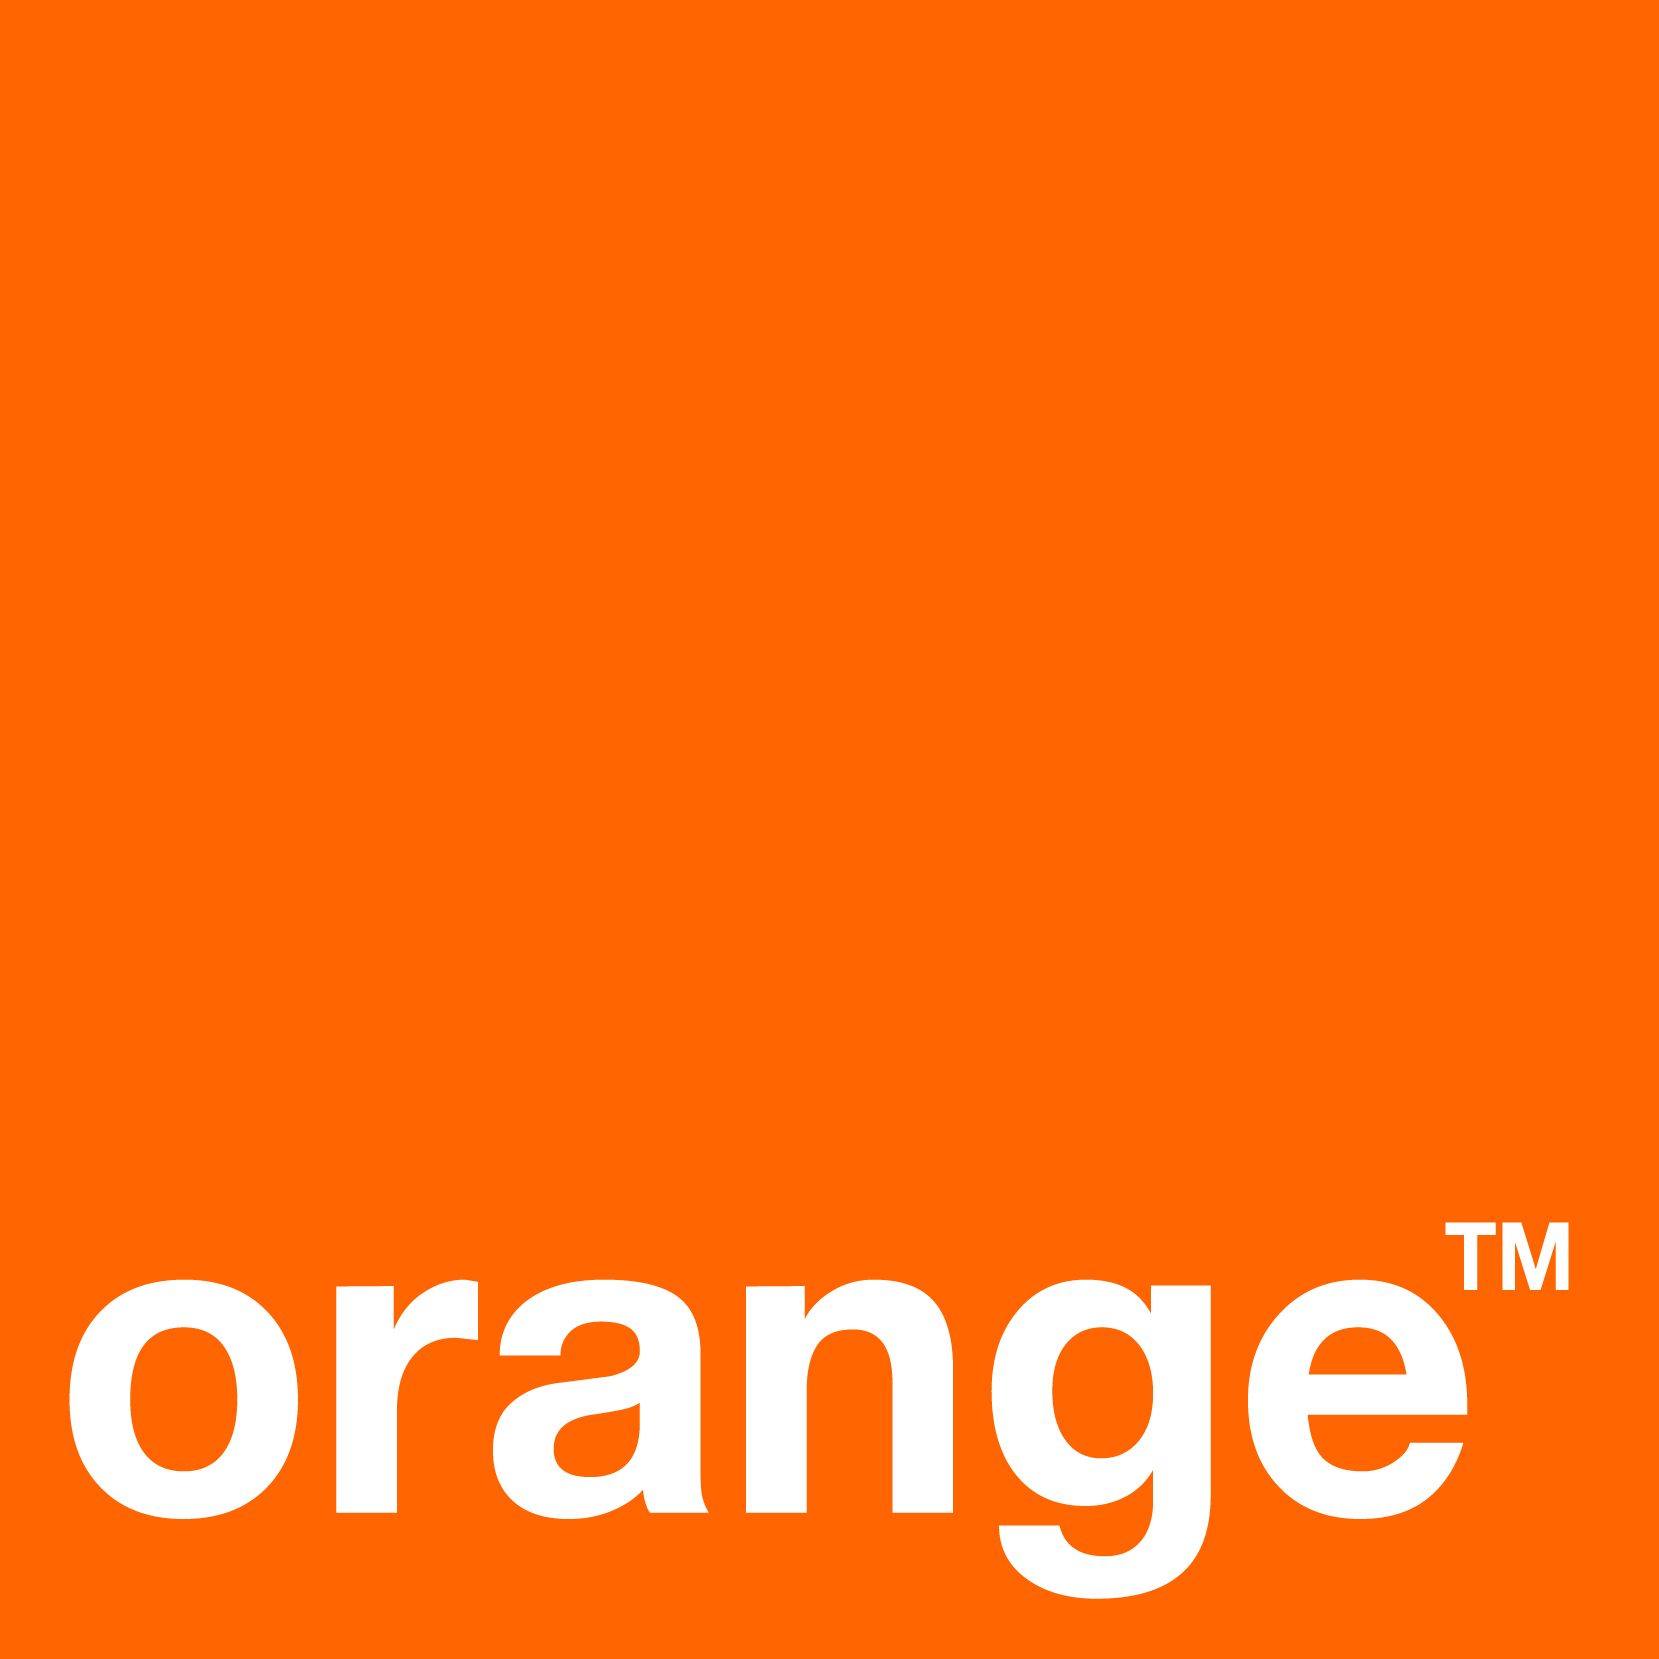 Orange TV advert by Thierry Legrand